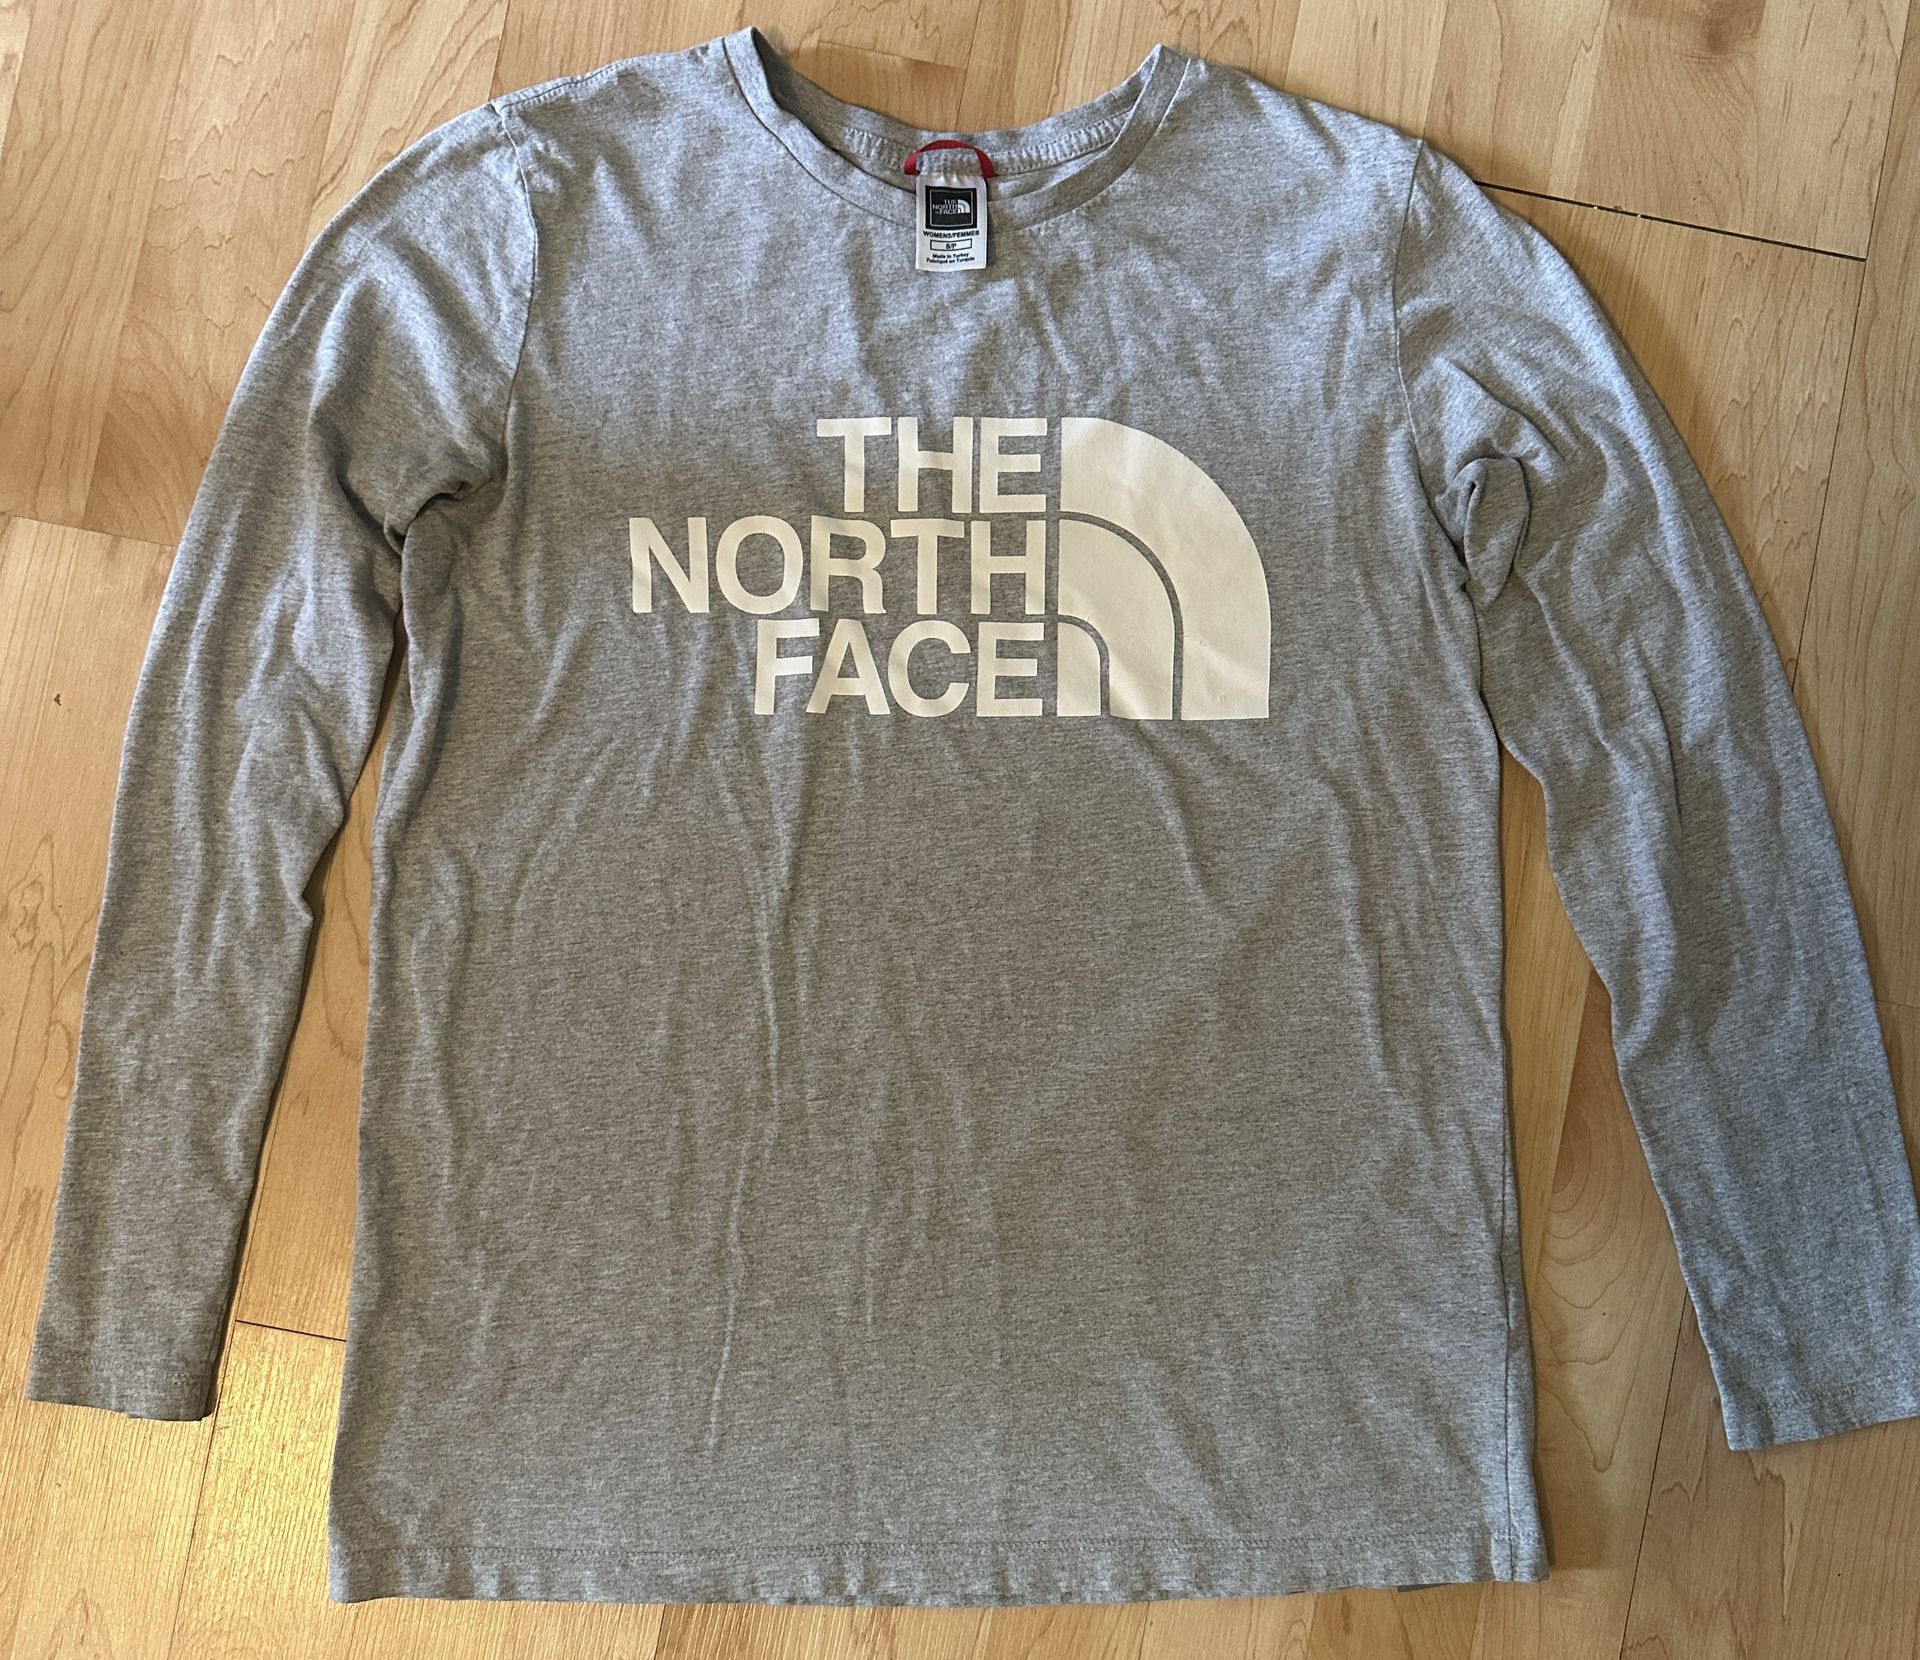 NorthFace Gray Long Sleeve Shirt - Size Small